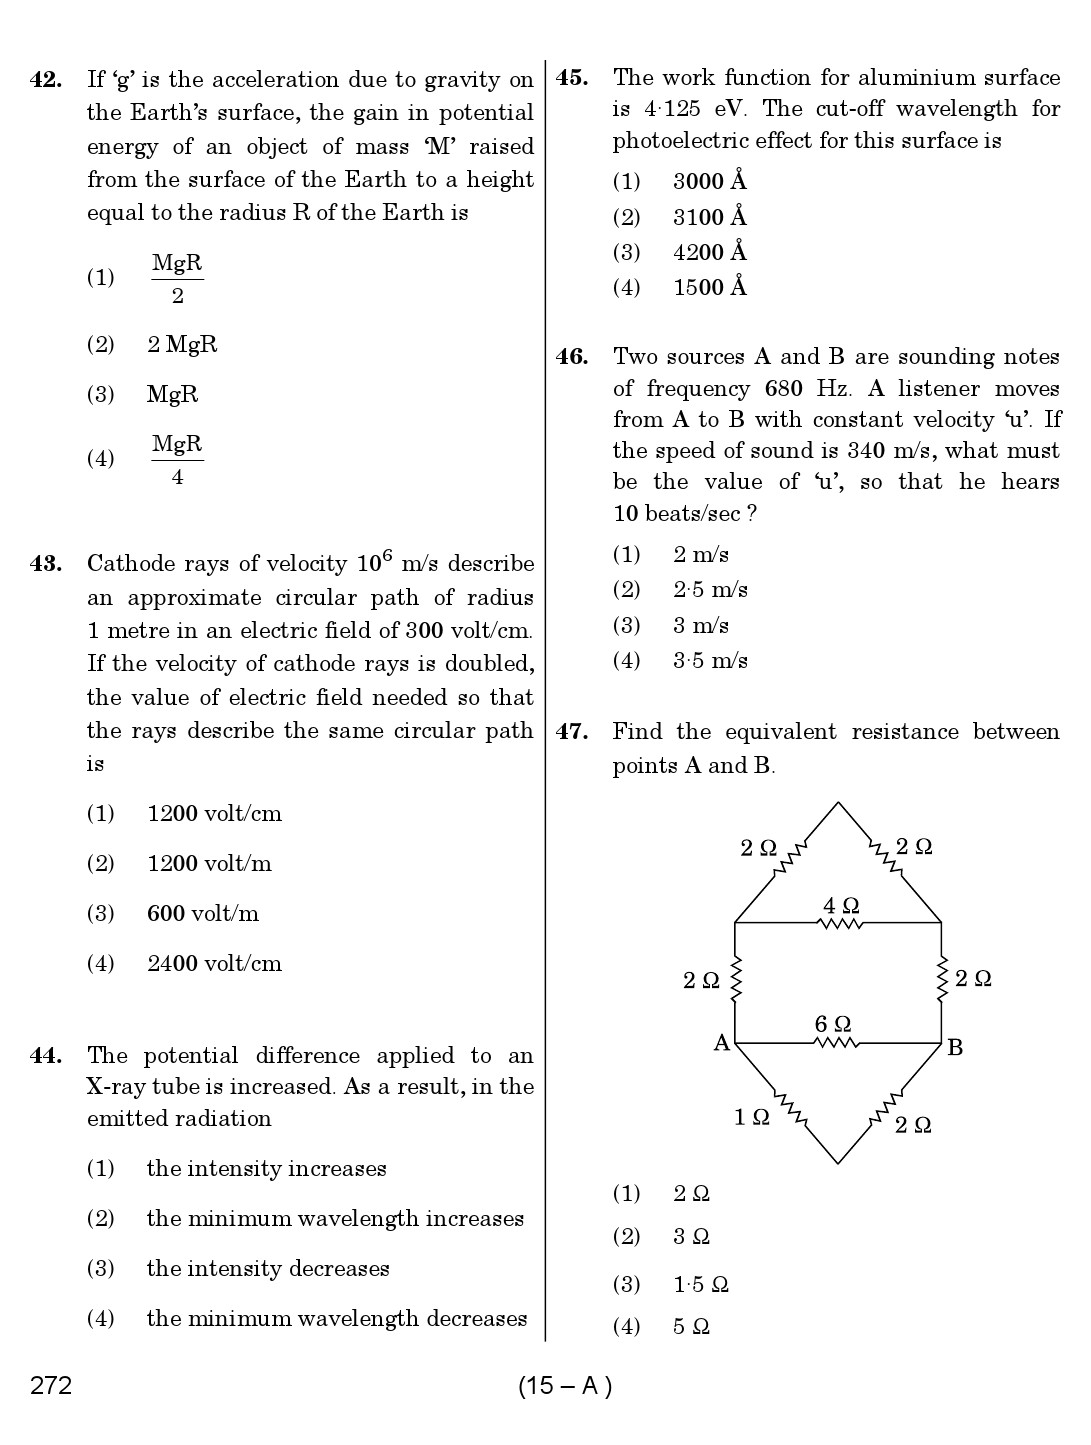 Karnataka PSC Mathematics Teacher Exam Sample Question Paper Subject code 272 15